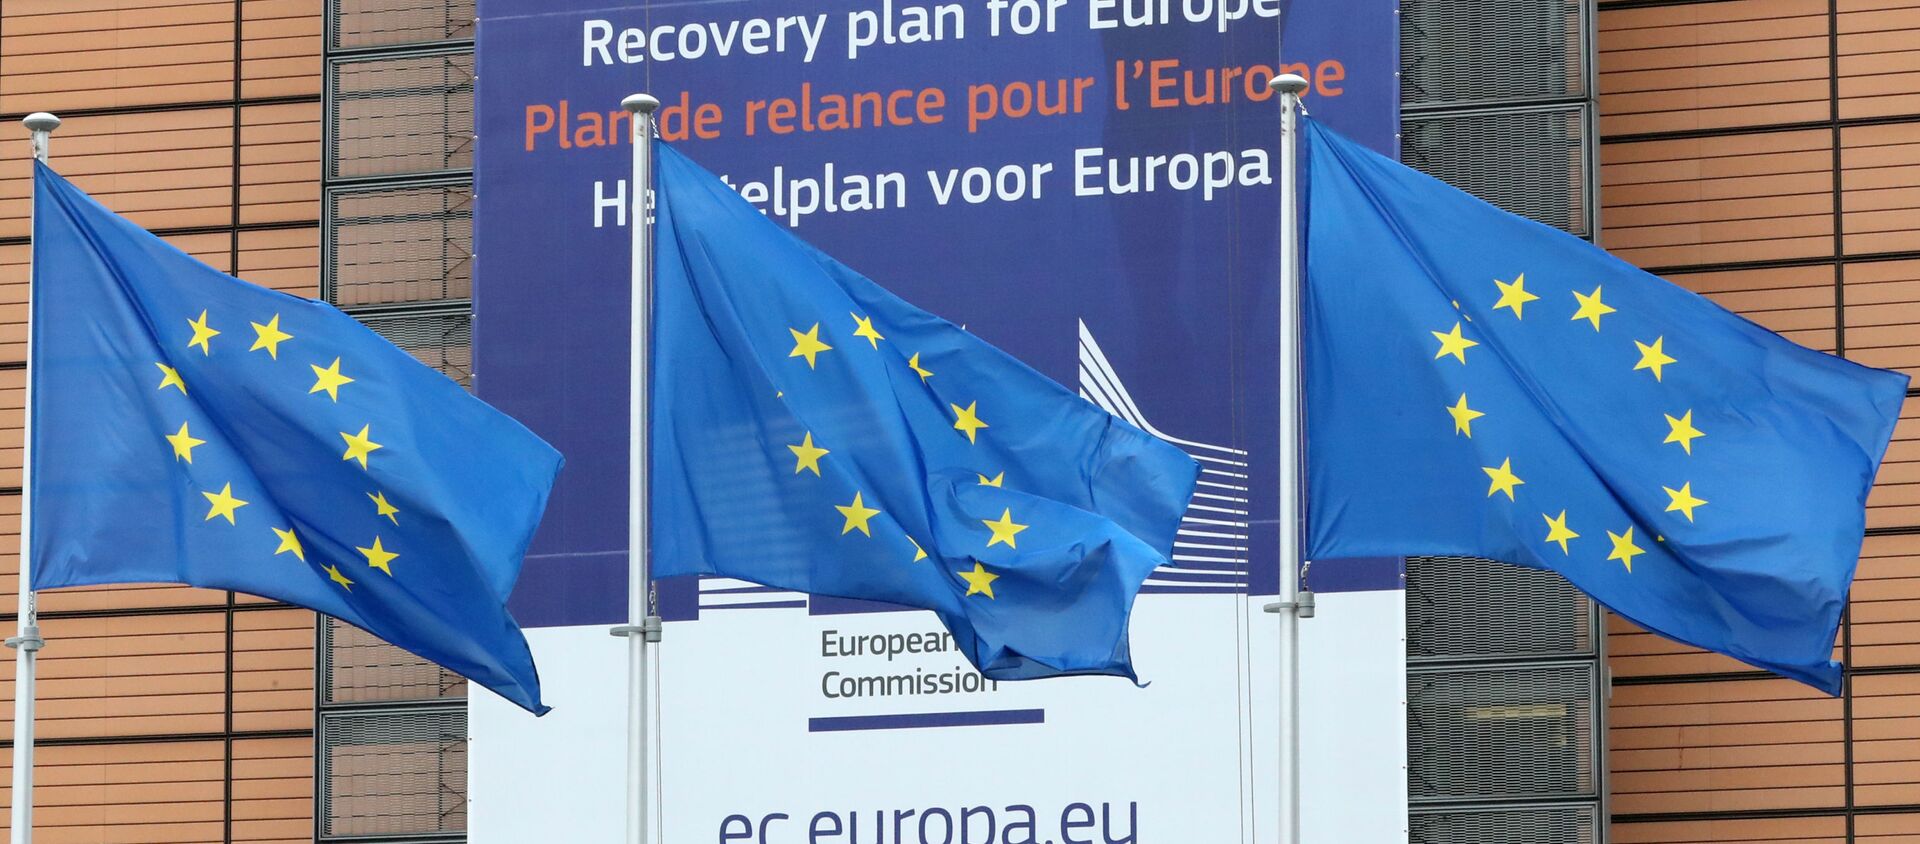 European Union flags flutter outside the European Commission headquarters, ahead of an EU leaders summit at the European Council headquarters, in Brussels, Belgium July 16, 2020. - Sputnik International, 1920, 12.09.2020